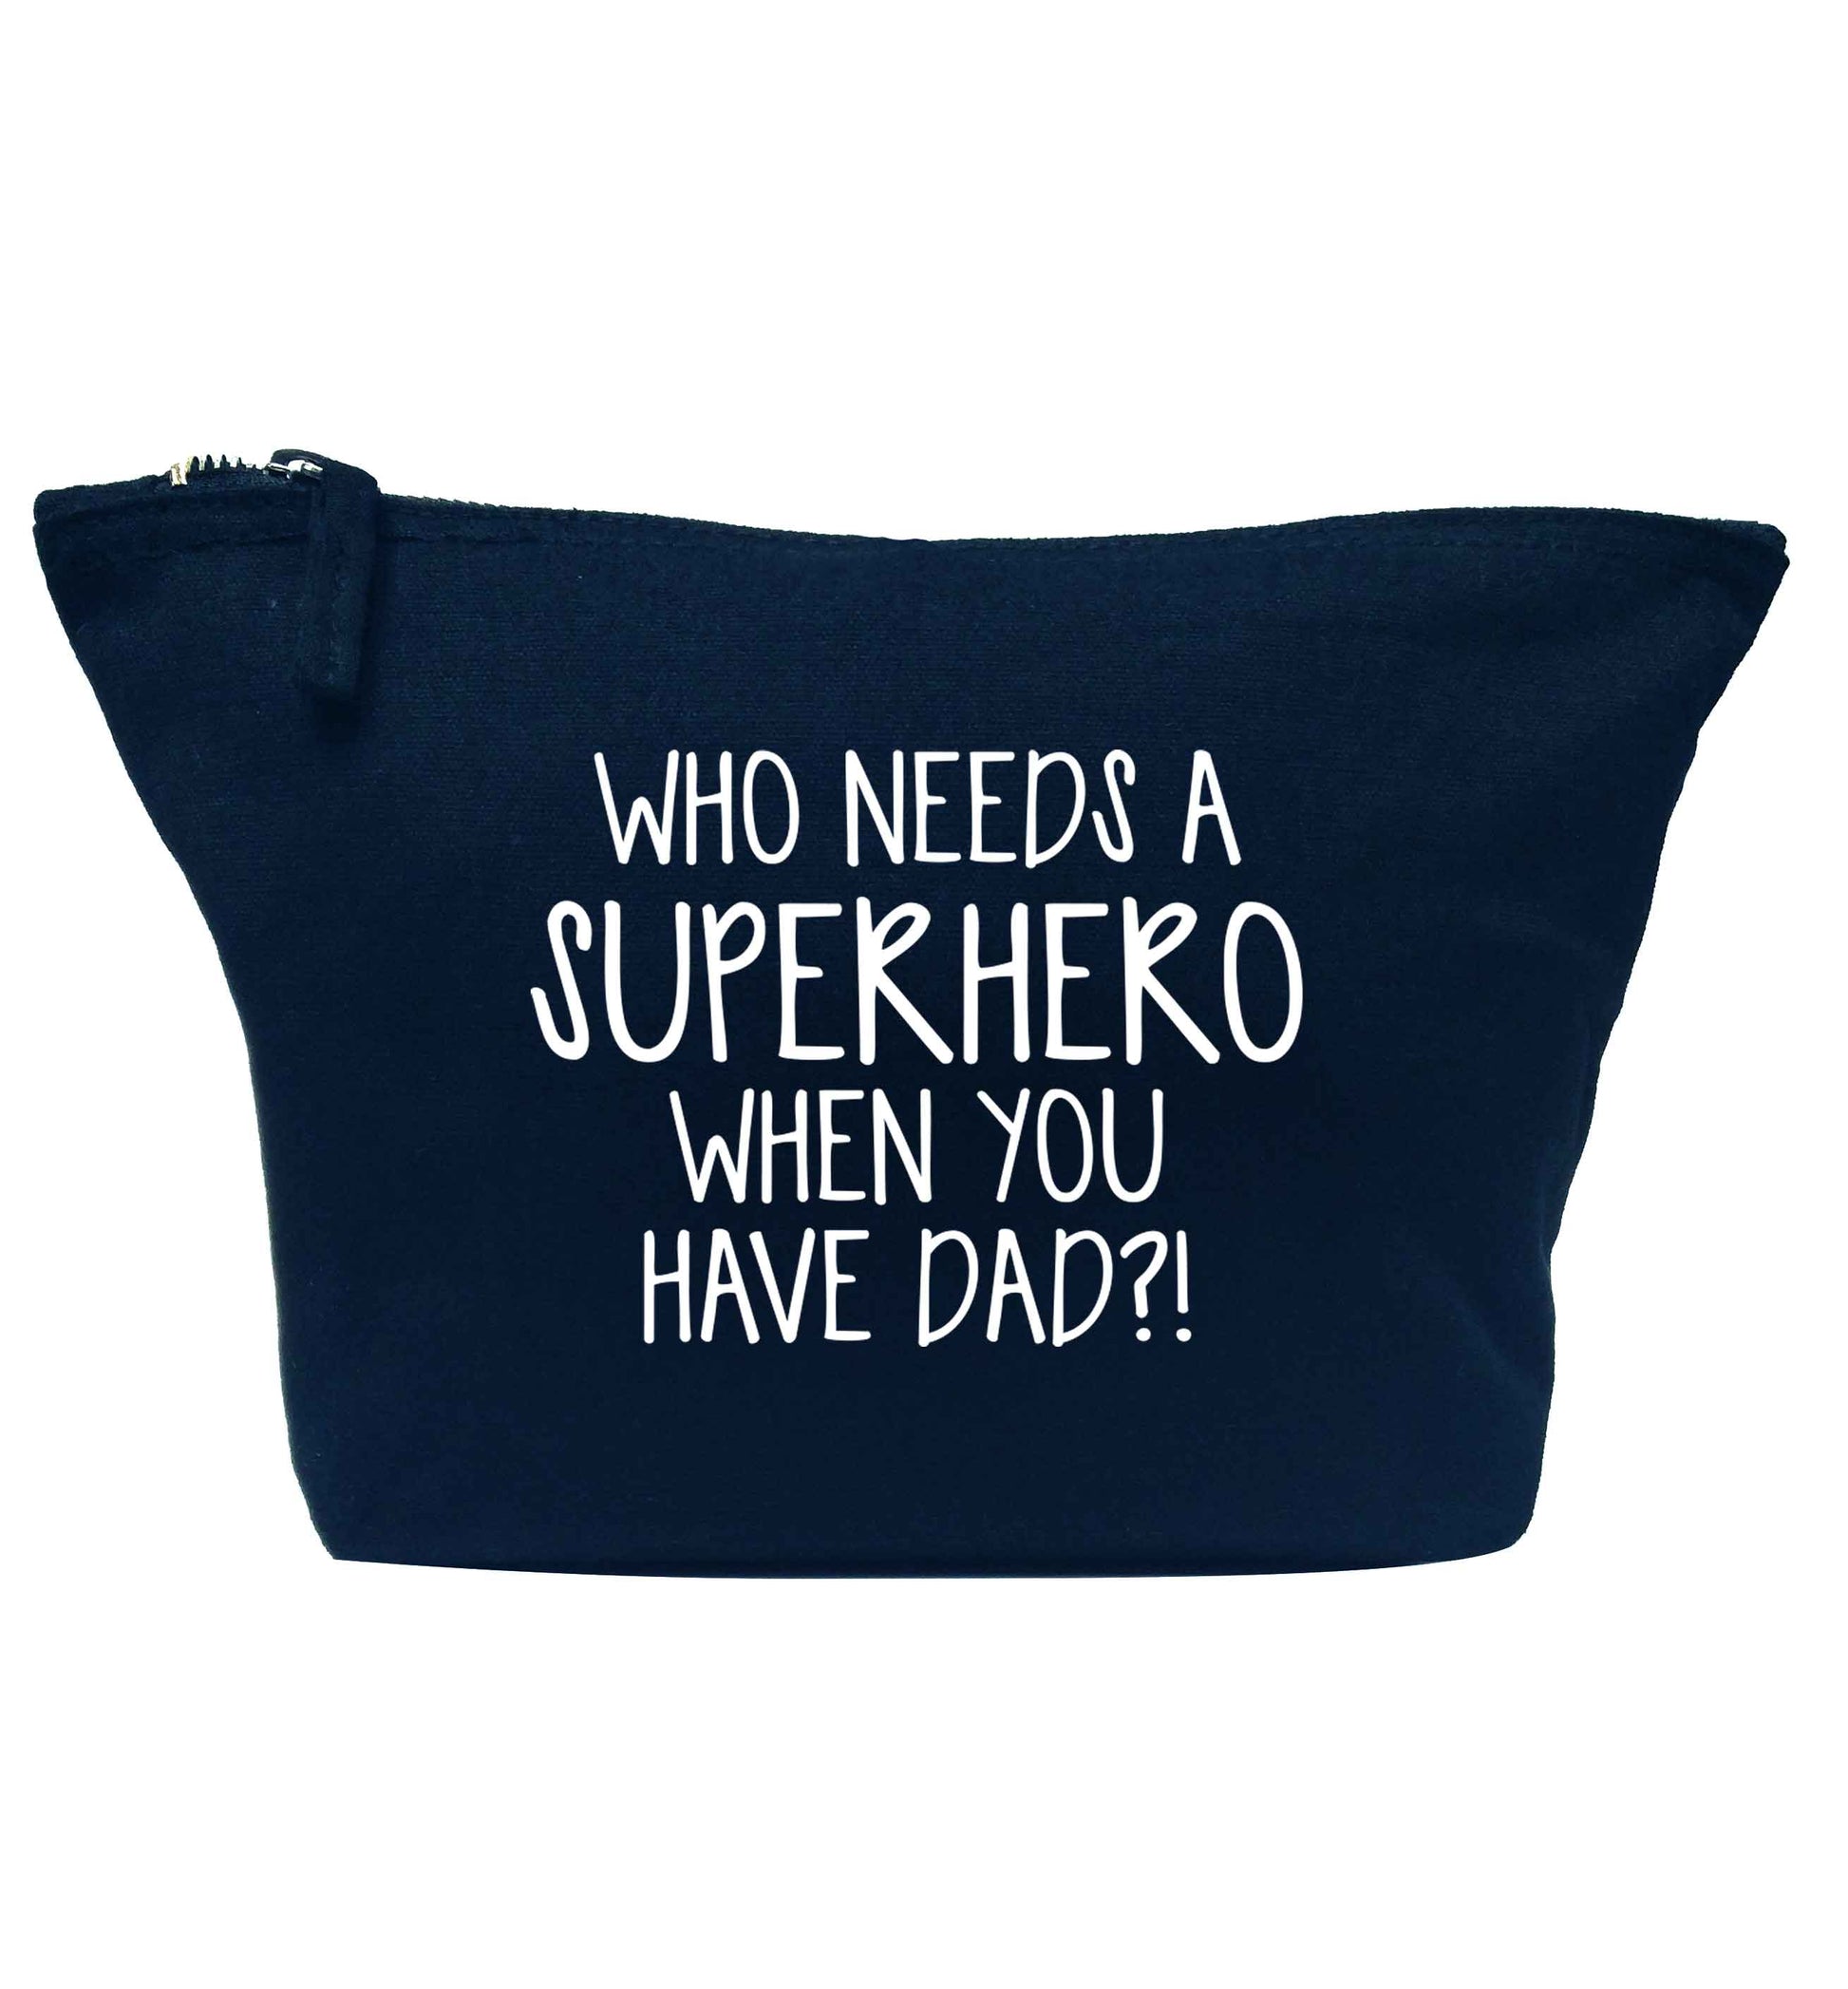 Who needs a superhero when you have dad! navy makeup bag